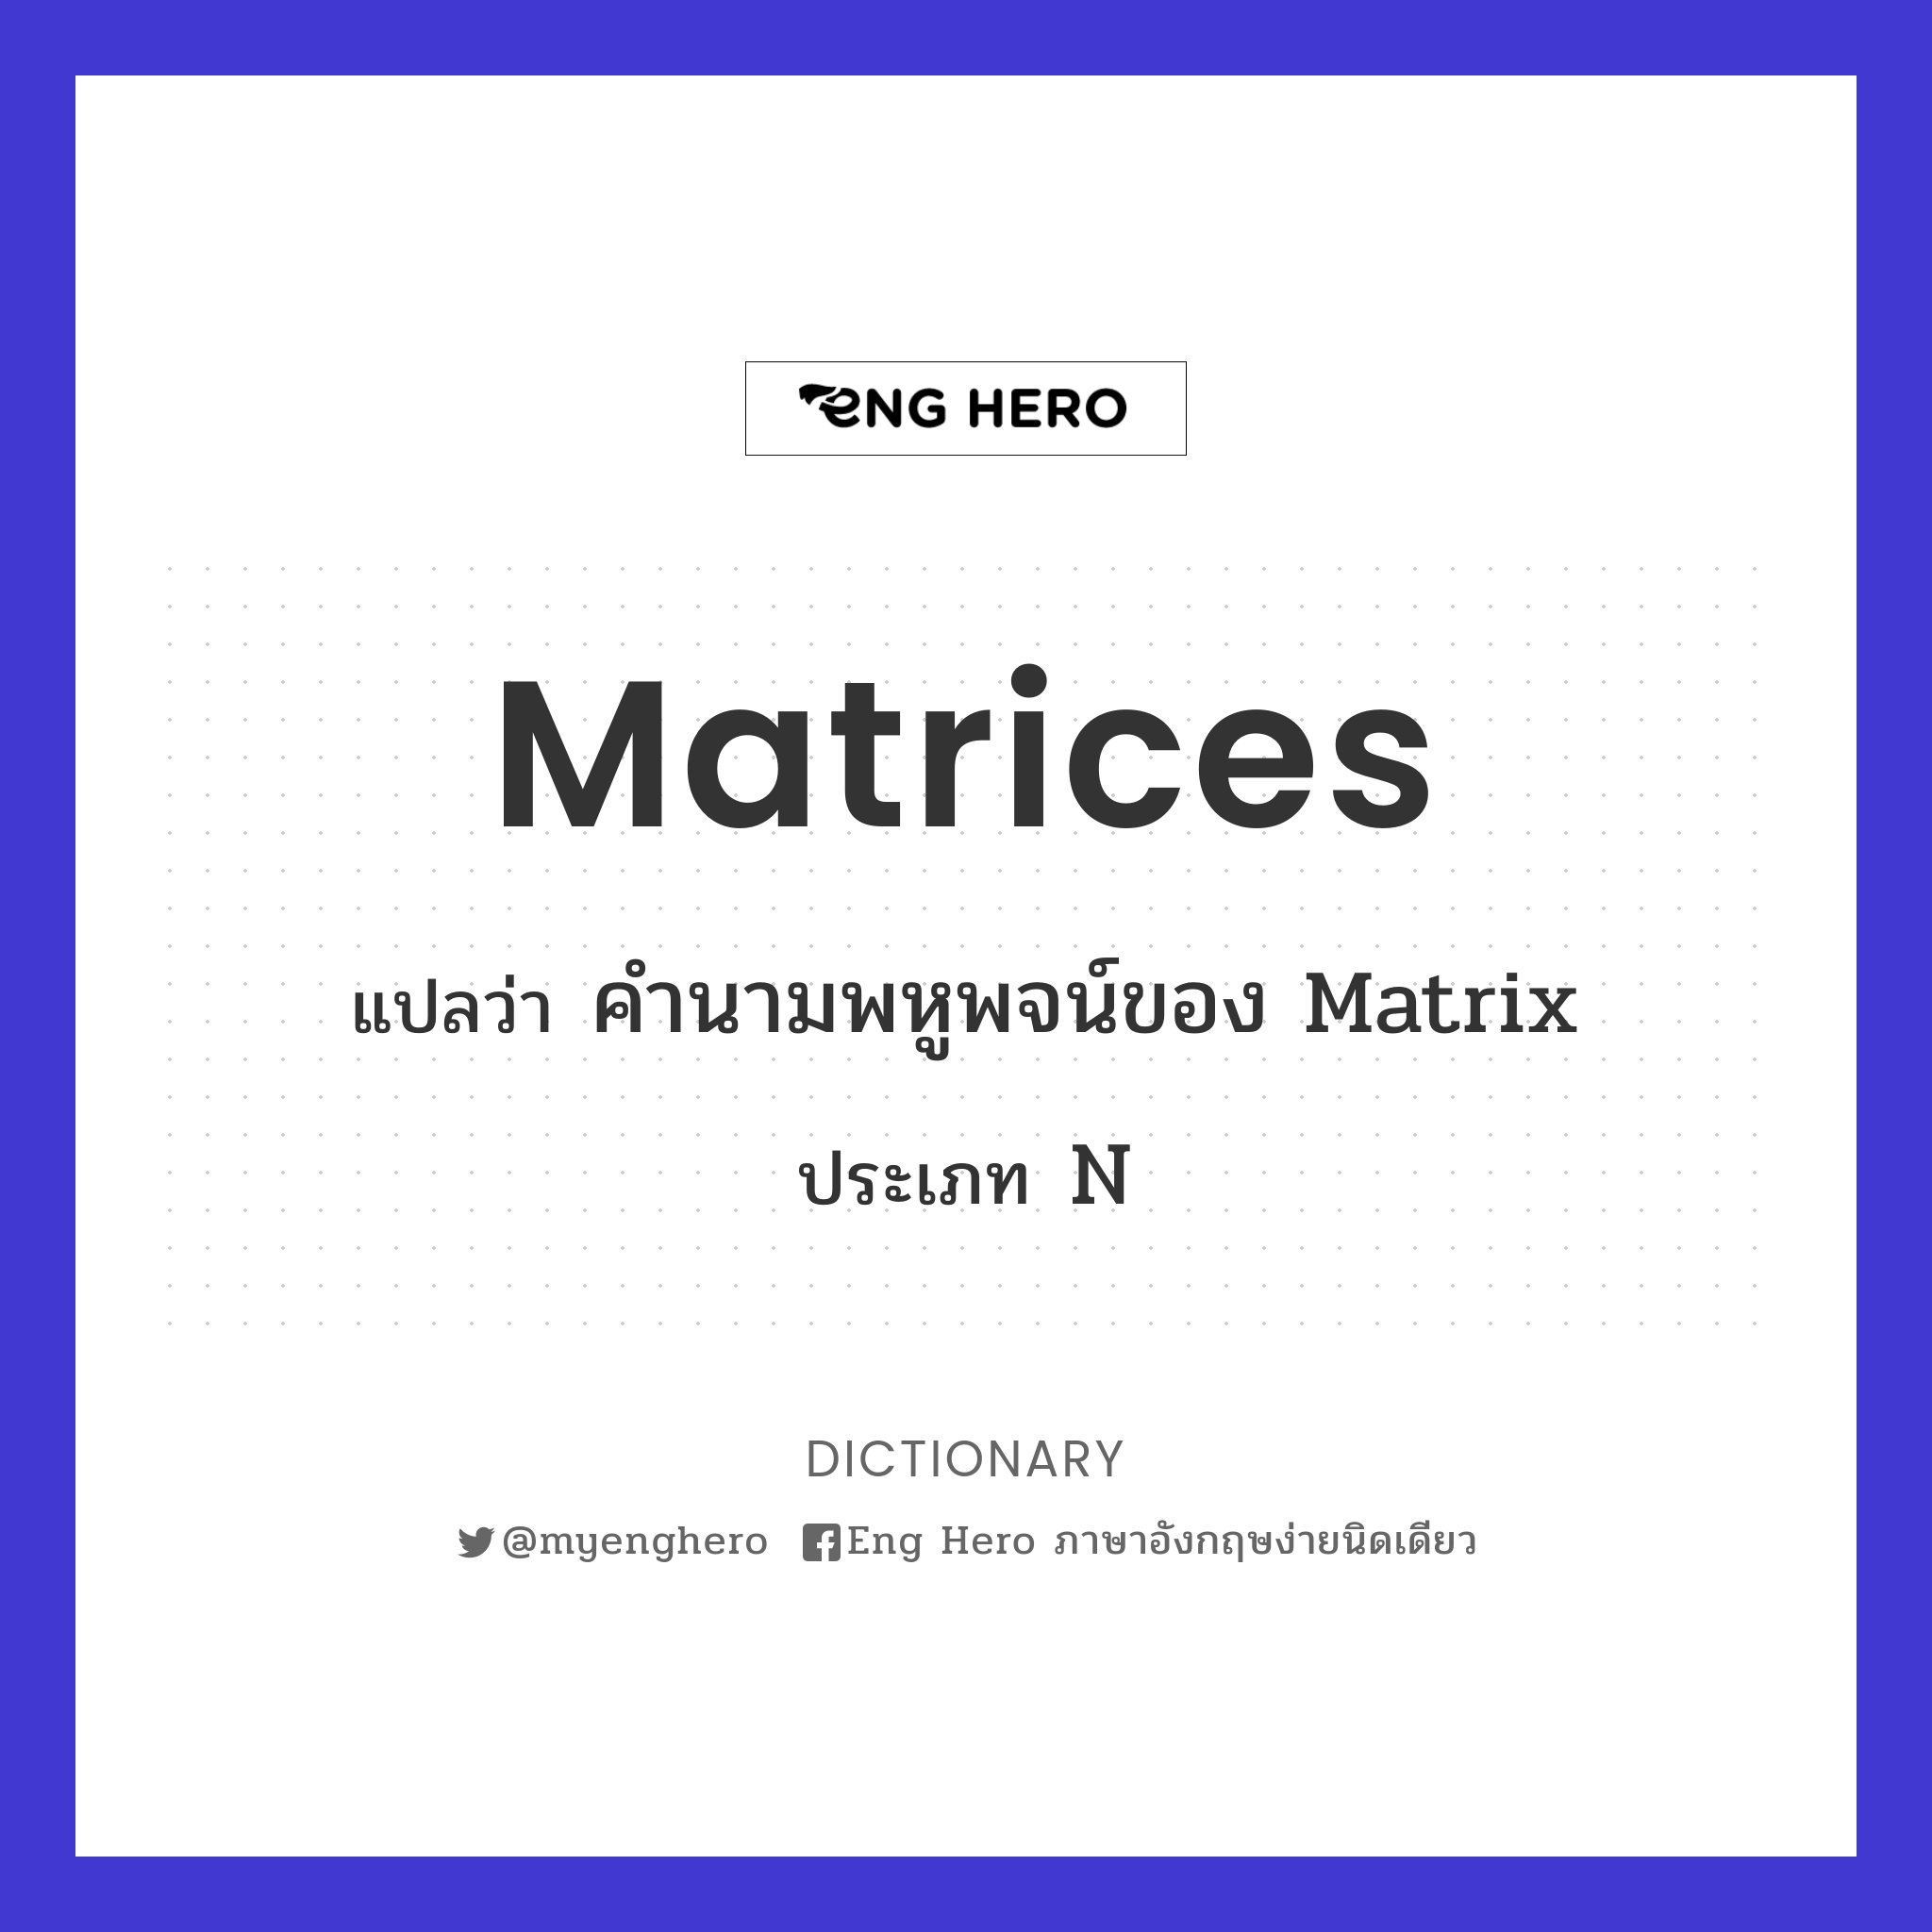 matrices